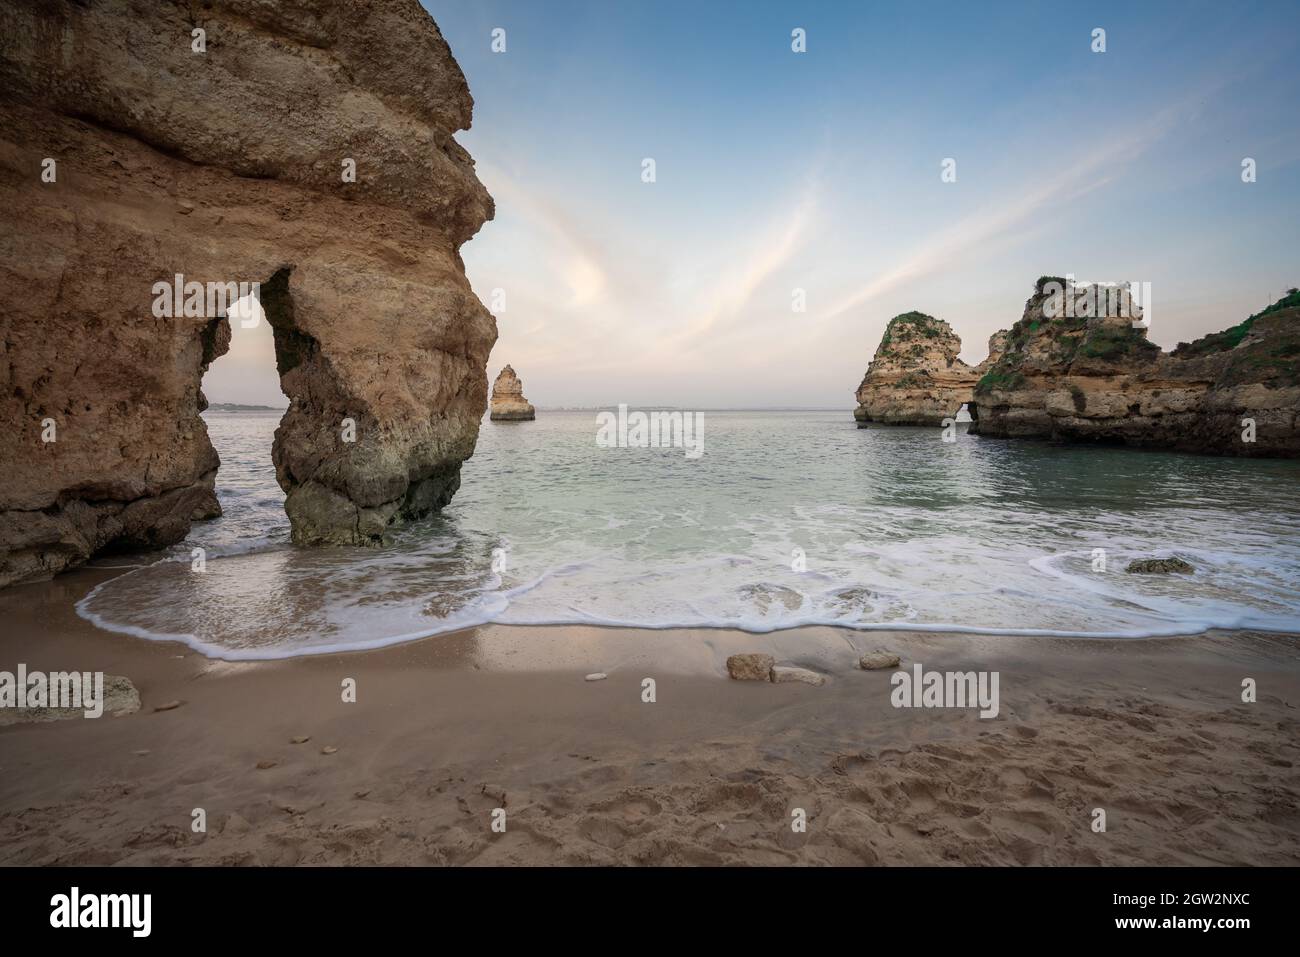 Praia do Camilo Beach and Rock formations - Lagos, Algarve, Portugal Stock Photo